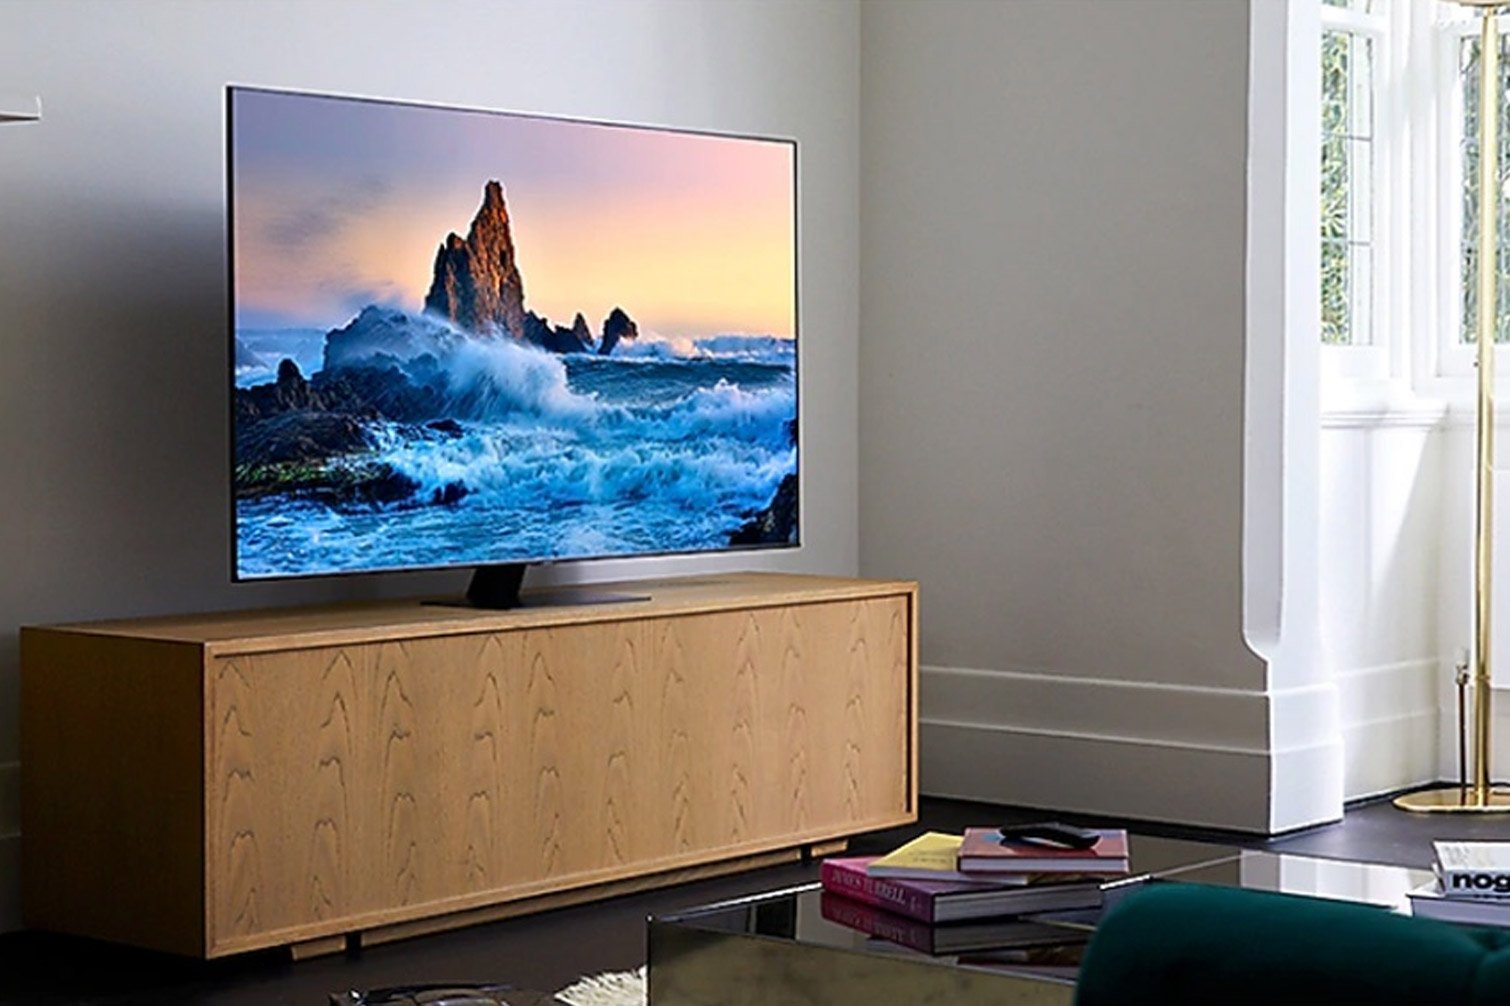 QLED Tivi 4K Samsung 55Q80T 55 inch Smart TV